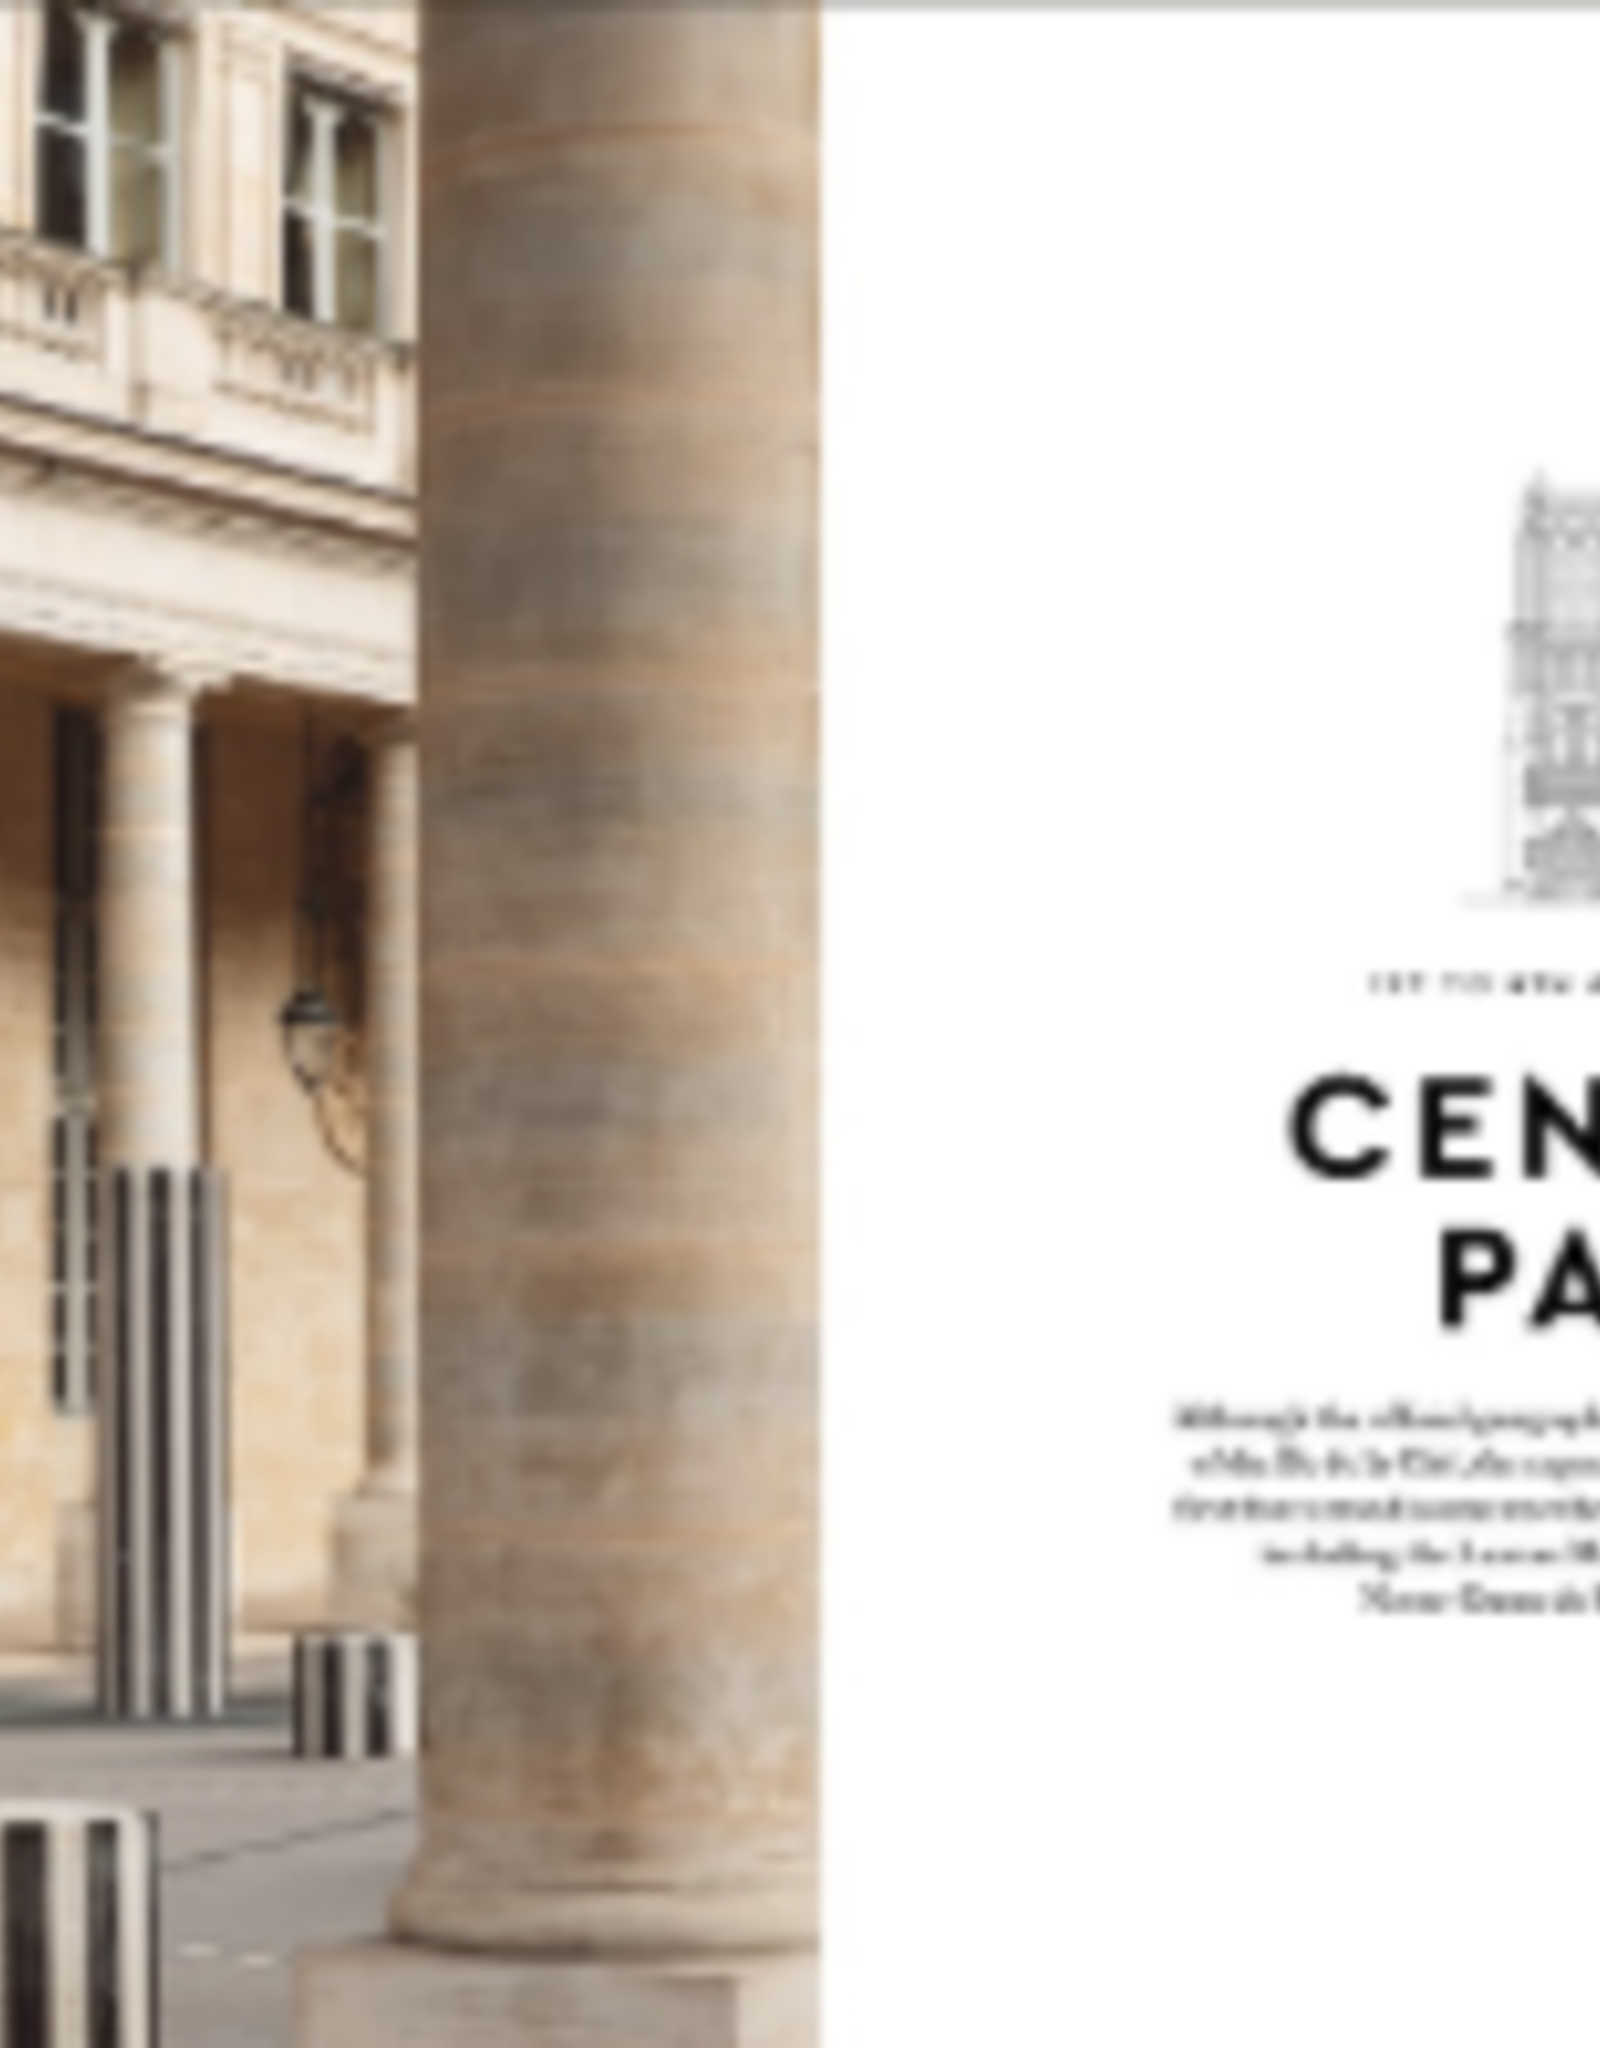 Enchanting Paris - The Hedonist's Guide by Helene Rocco & Sophia an Den hoek